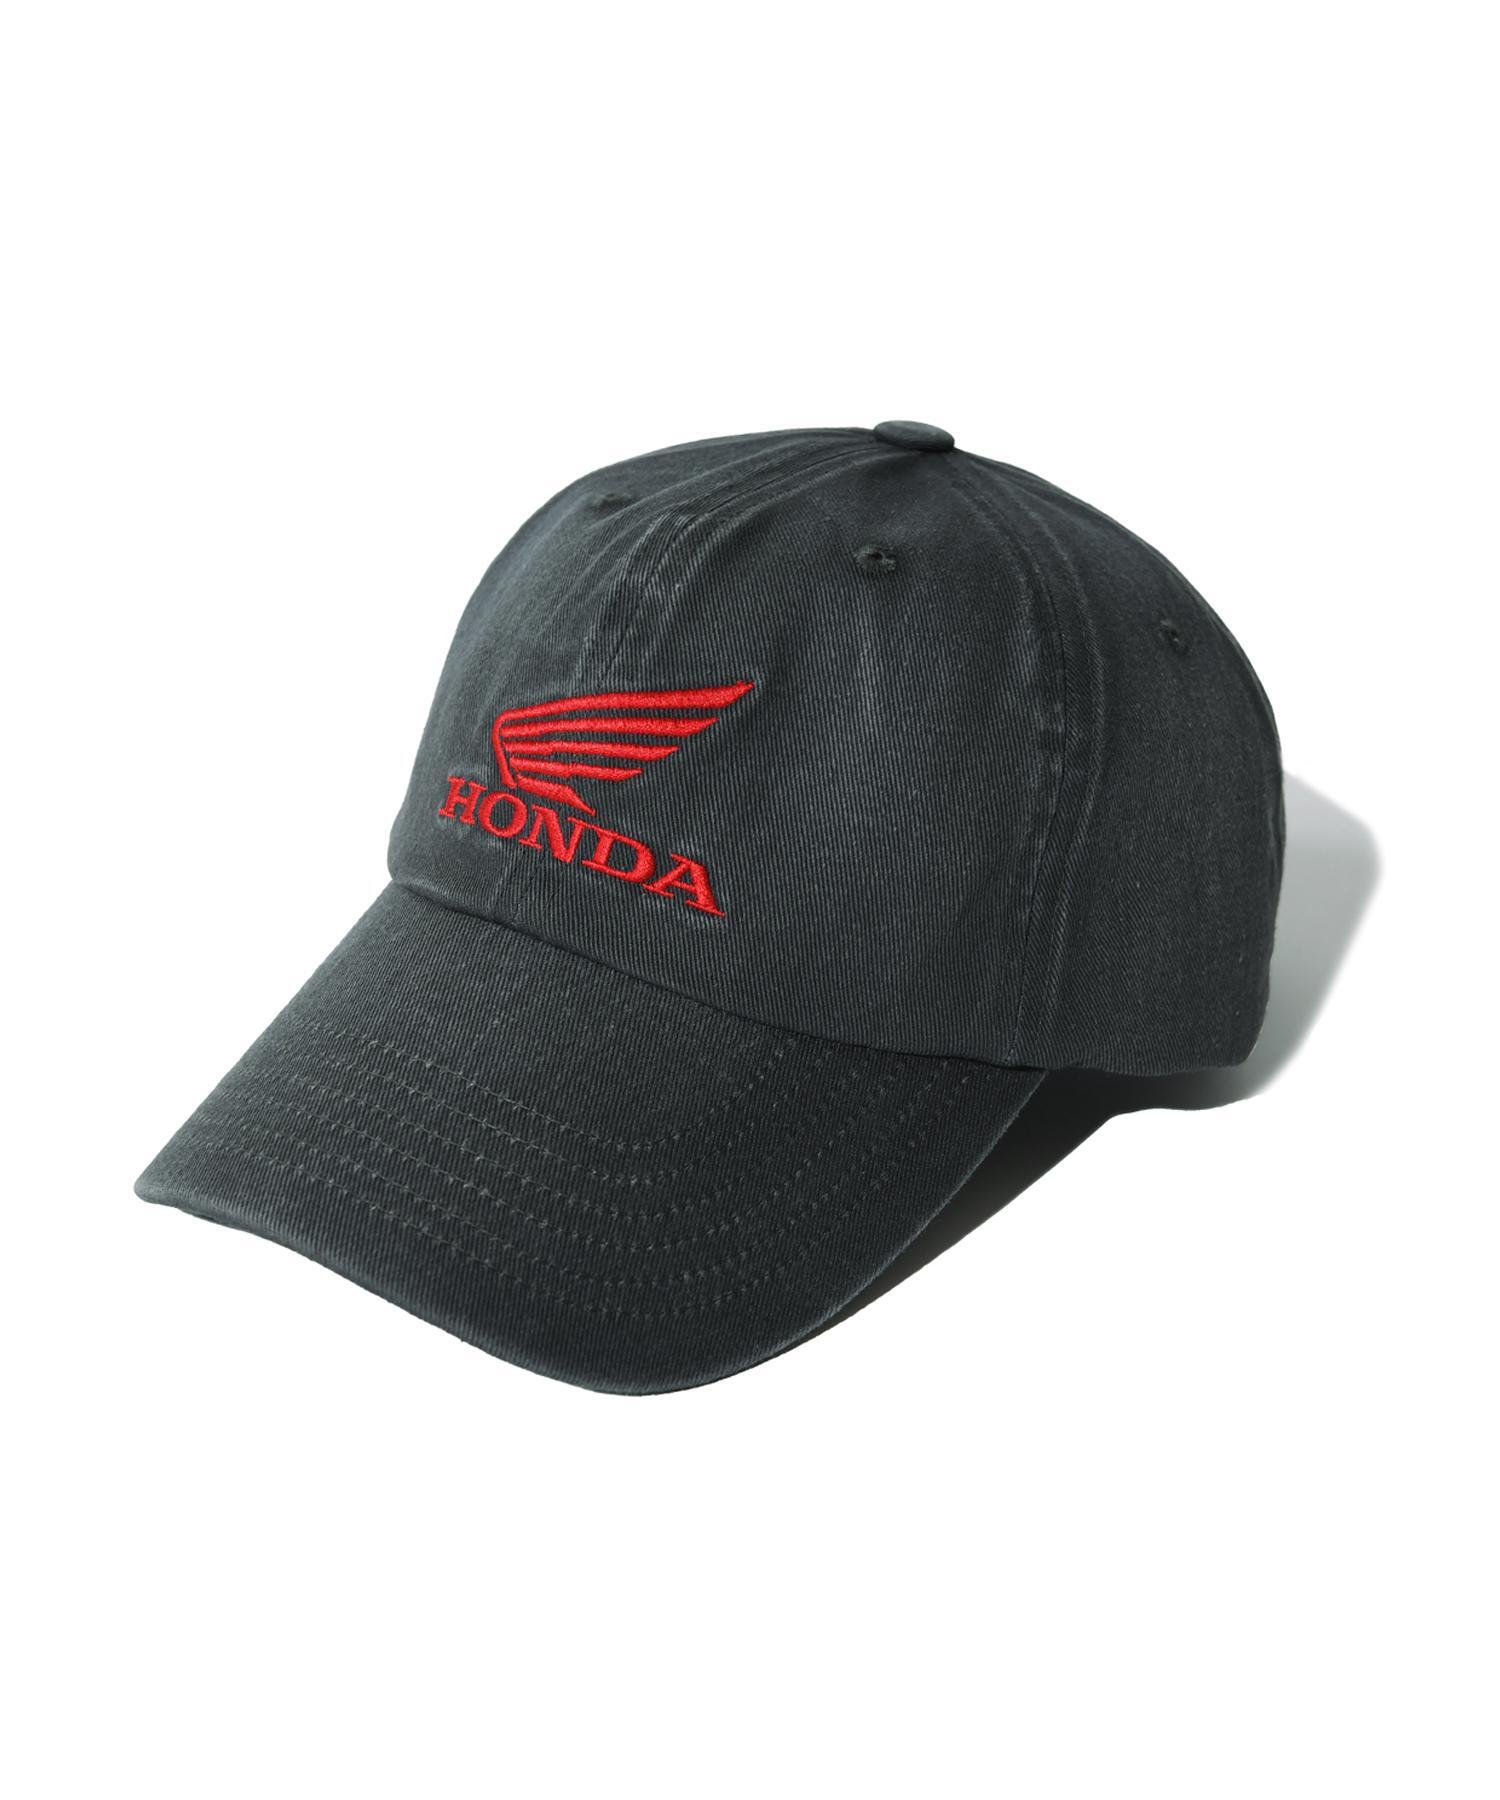 Honda Vintage Original Wing logo Cap Charocal